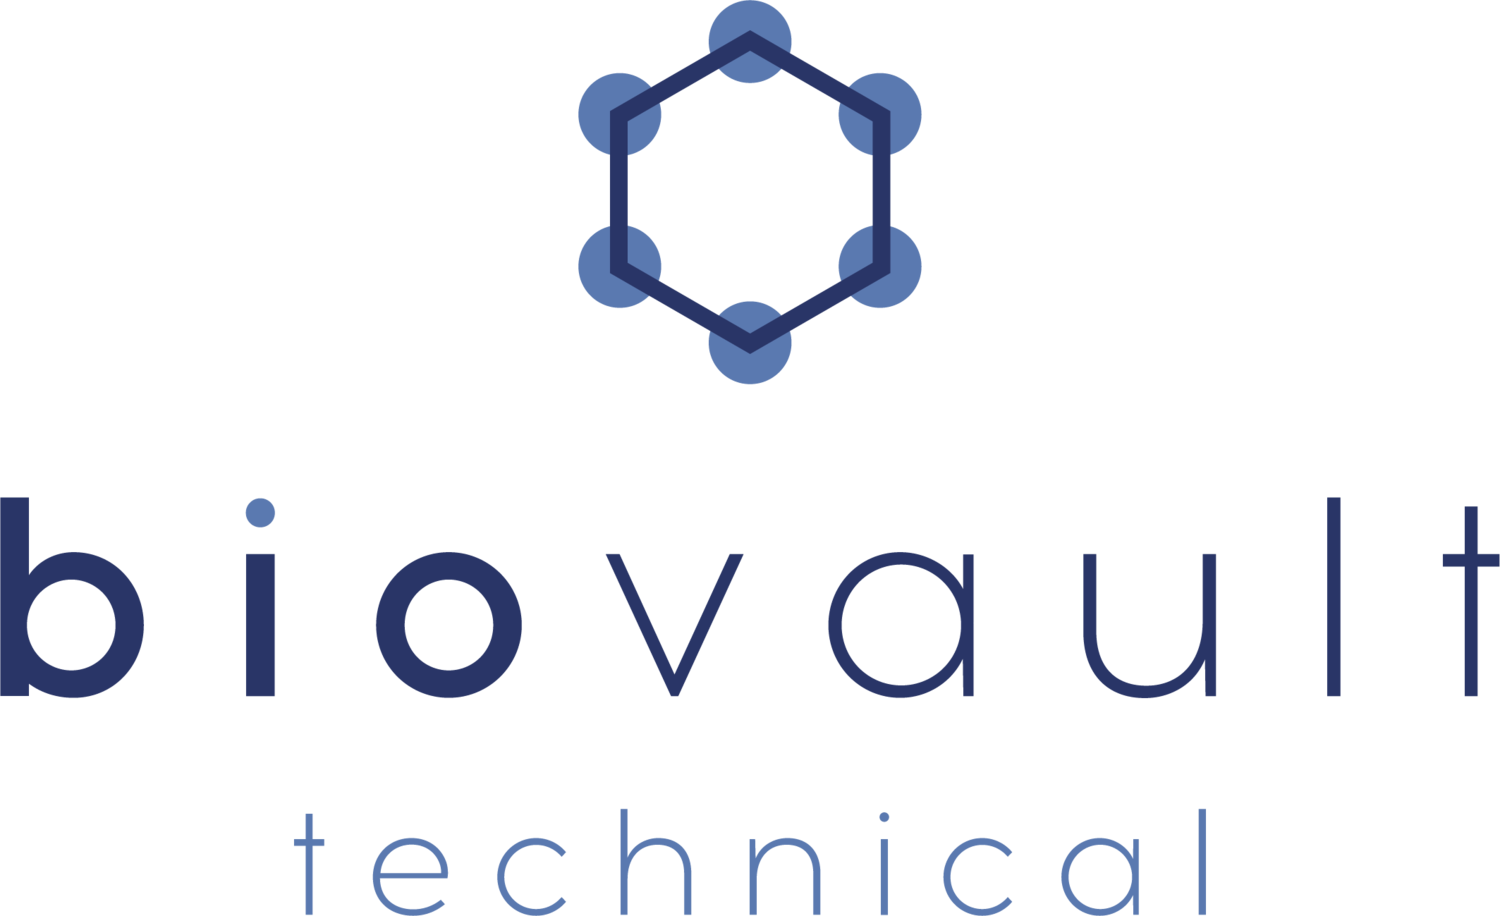 Biovault Technical